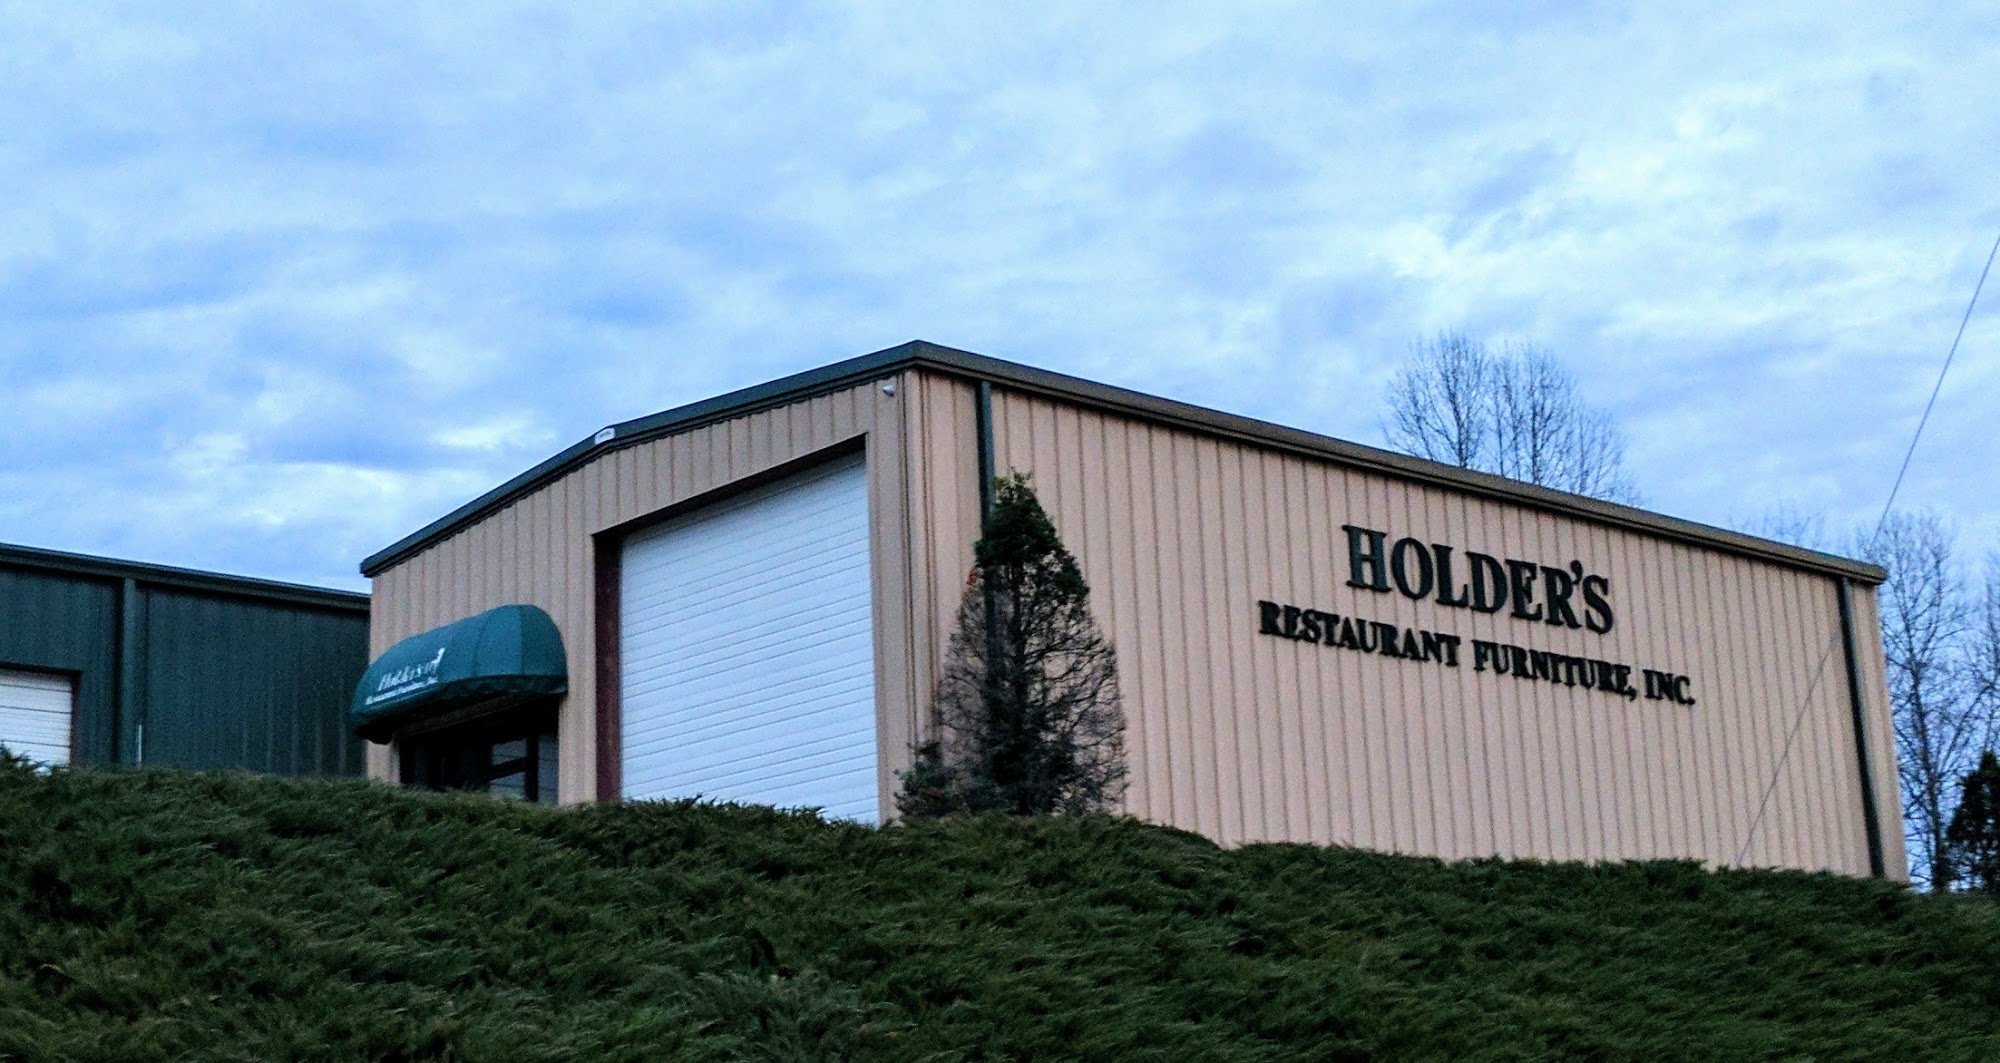 Holder's Restaurant Furniture, Inc.